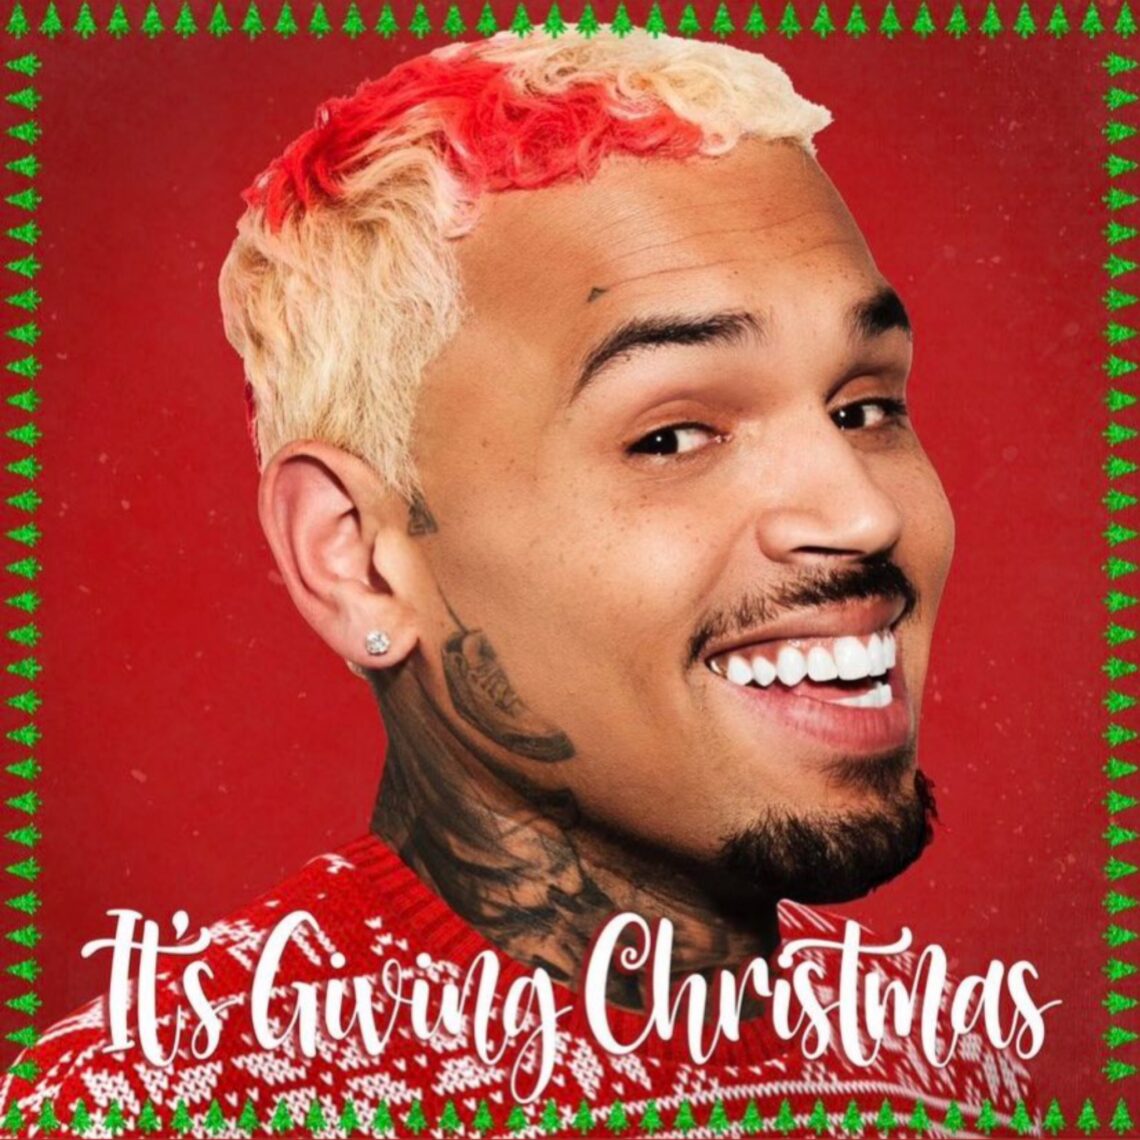 Chris Brown Shares Two New Christmas Songs Rated R&B